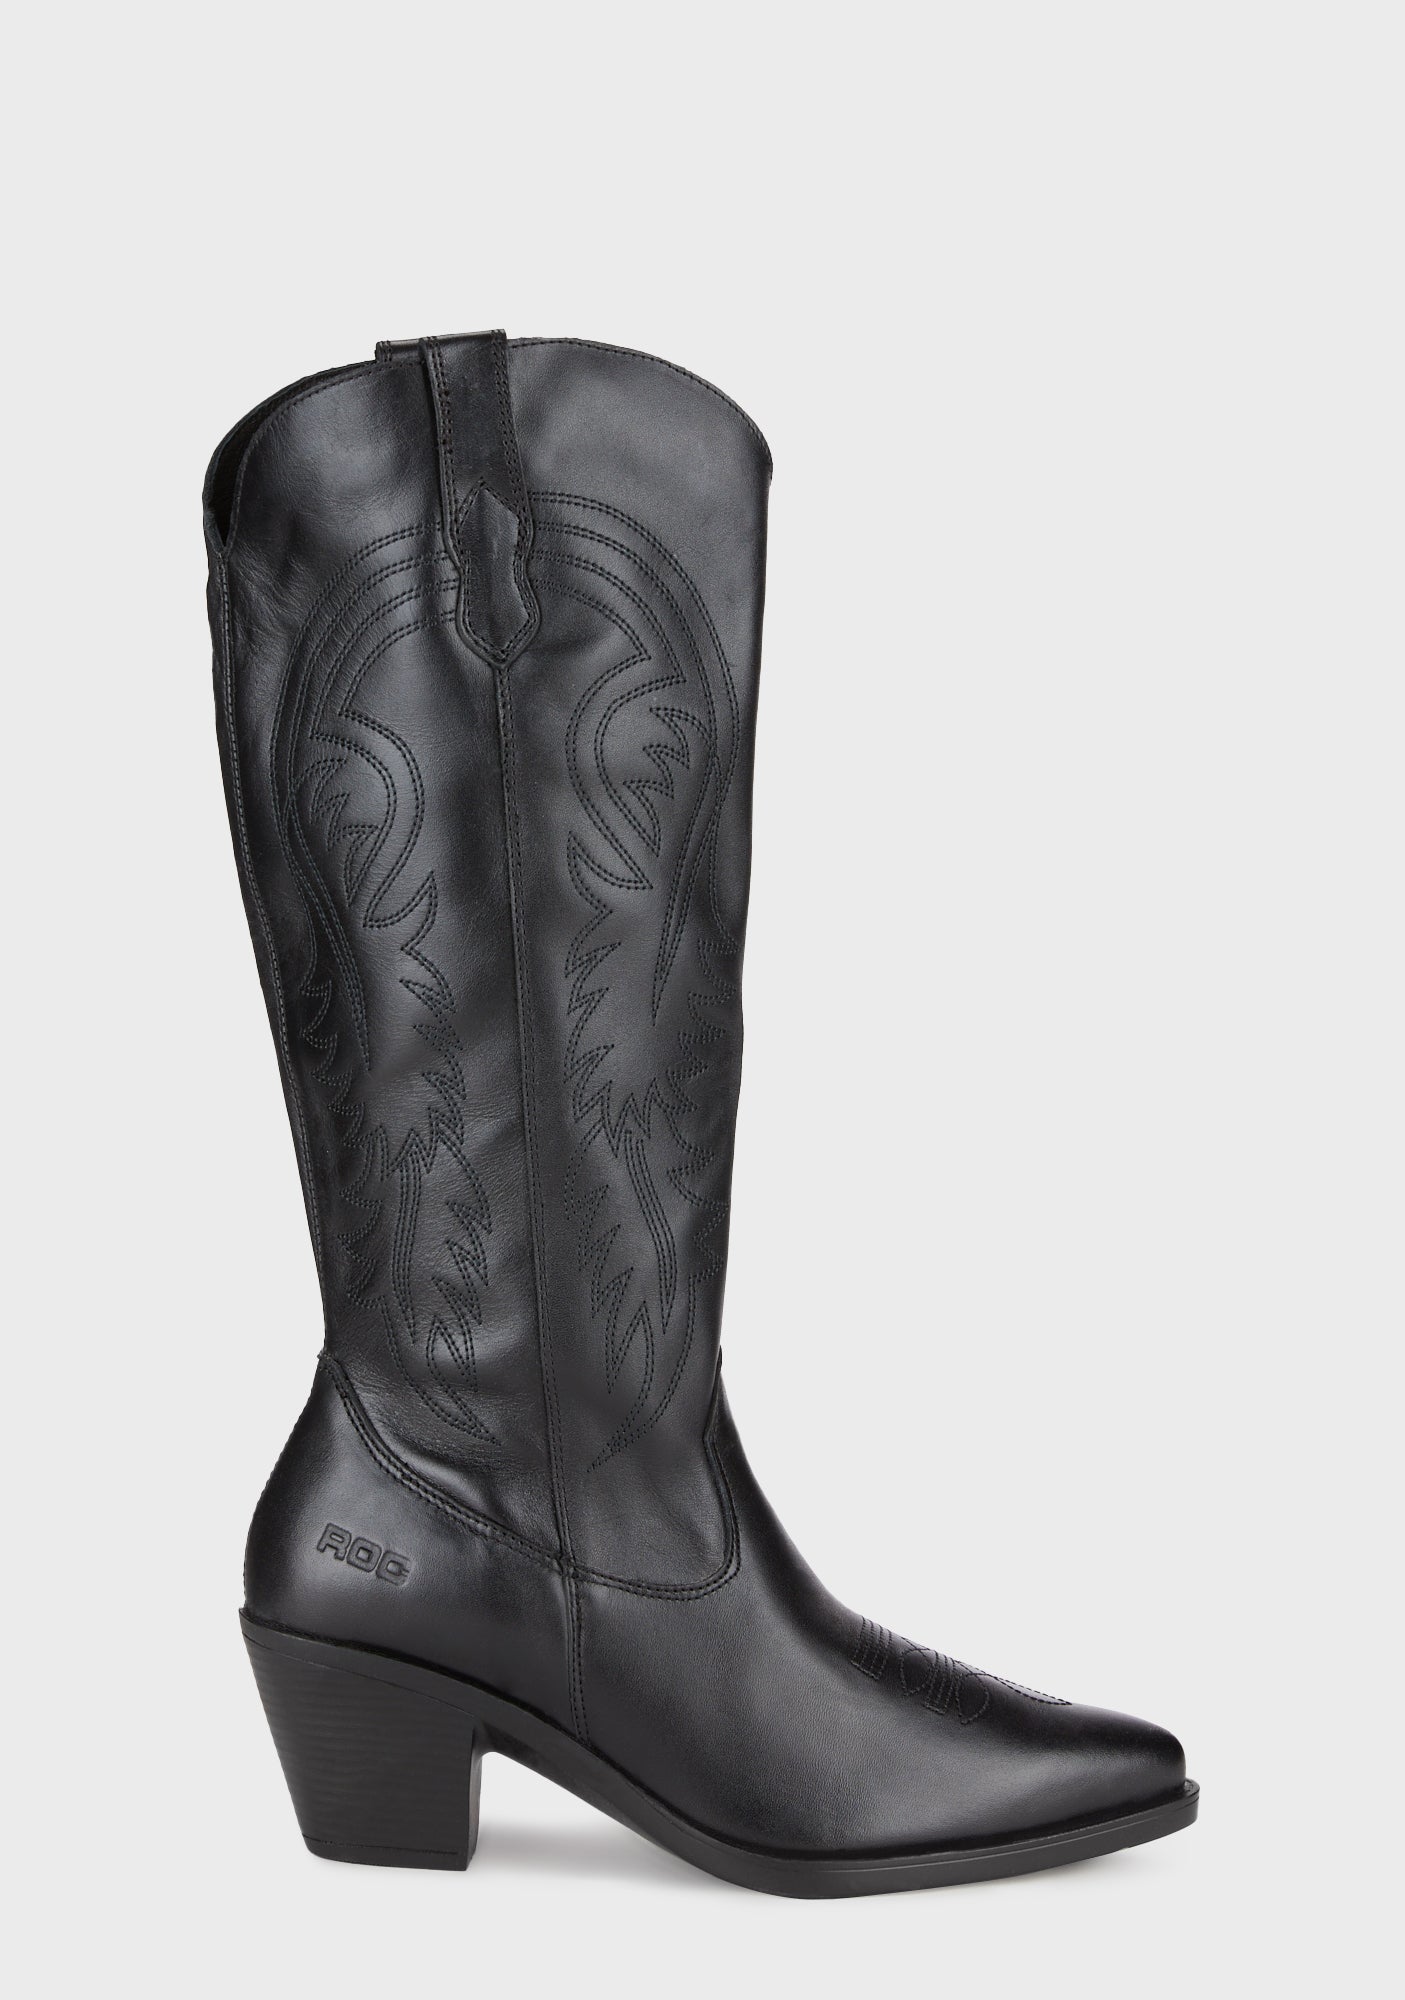 Roc Boots Australia Knee High Cowboy Boots - Black Leather – Dolls Kill